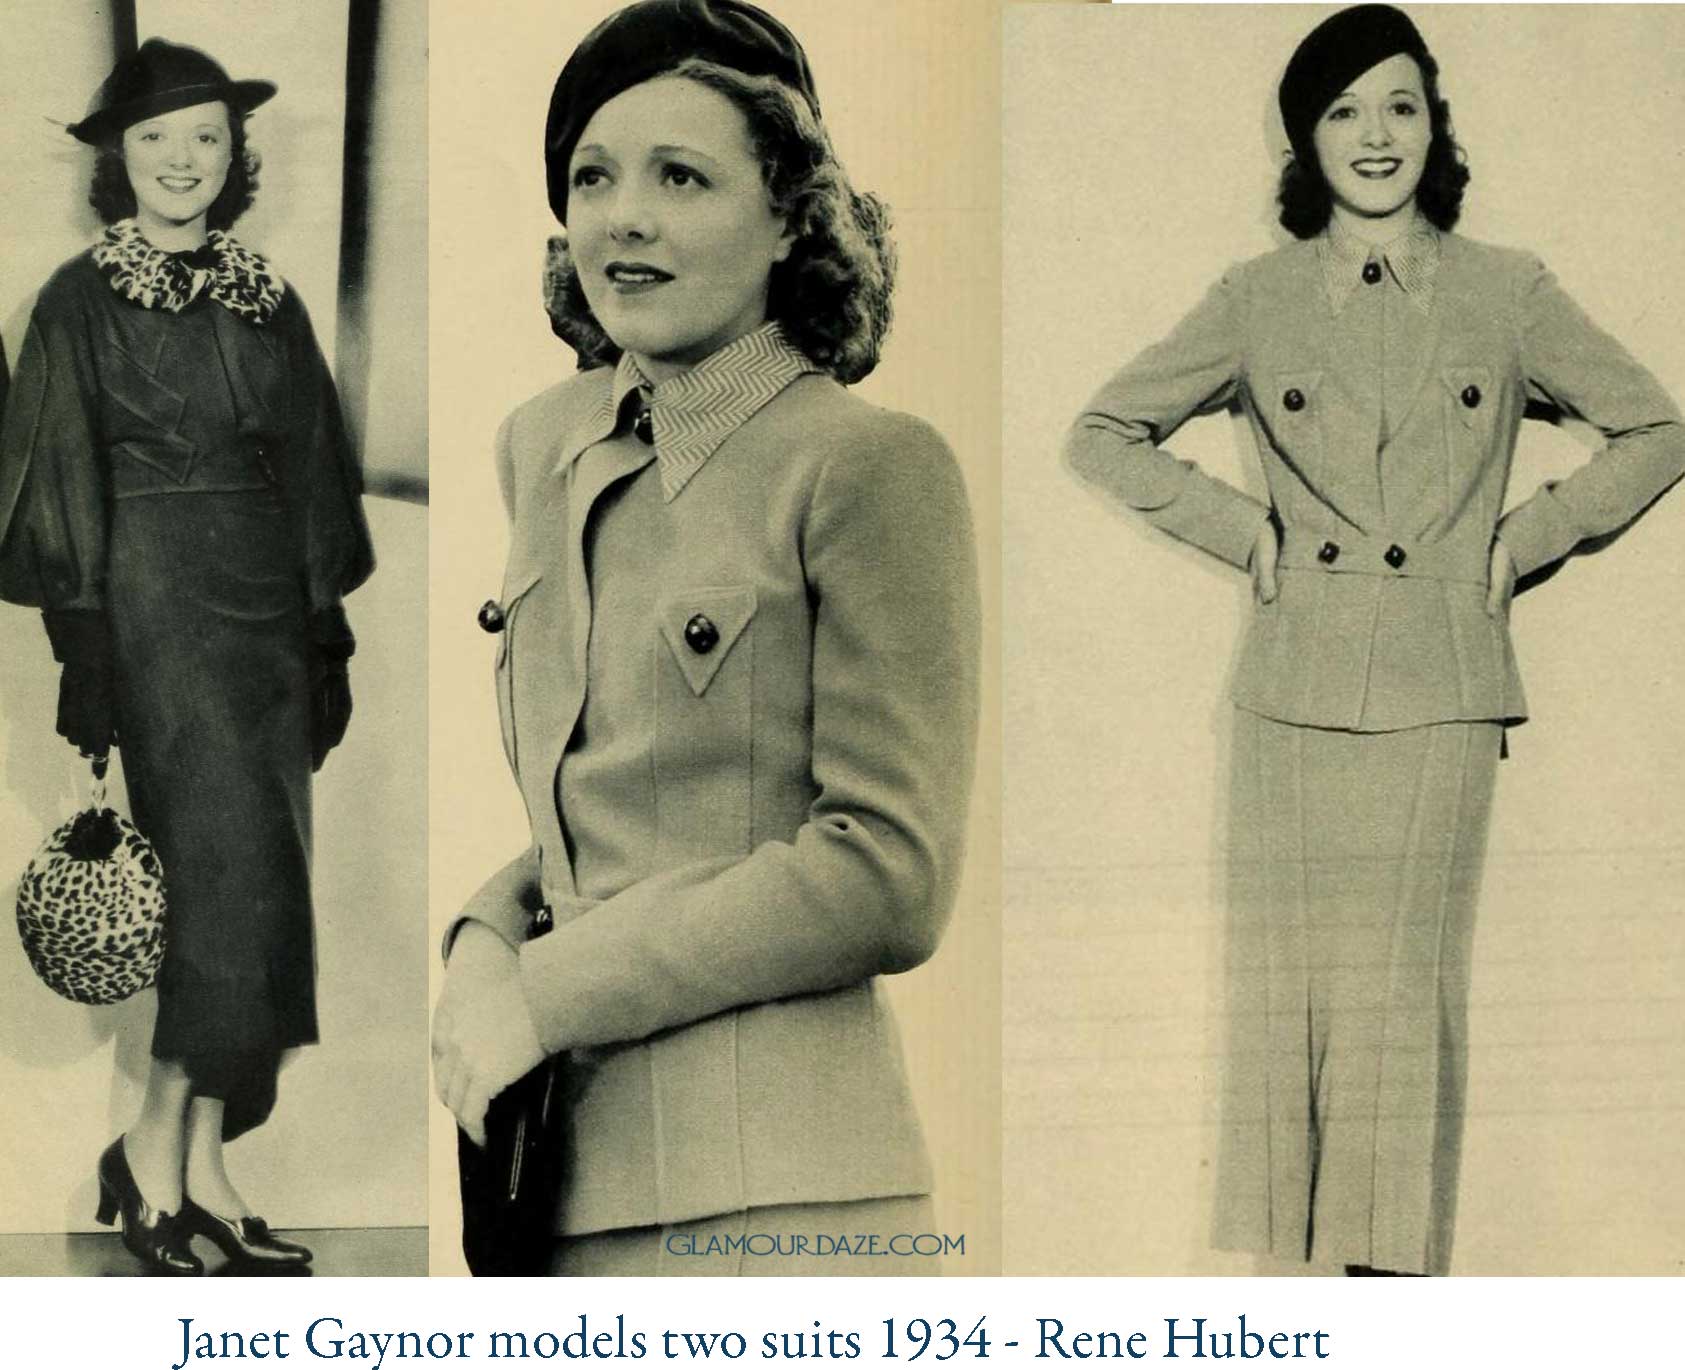 4 Janet Gaynor models two 1930s suits Rene Hubert designer